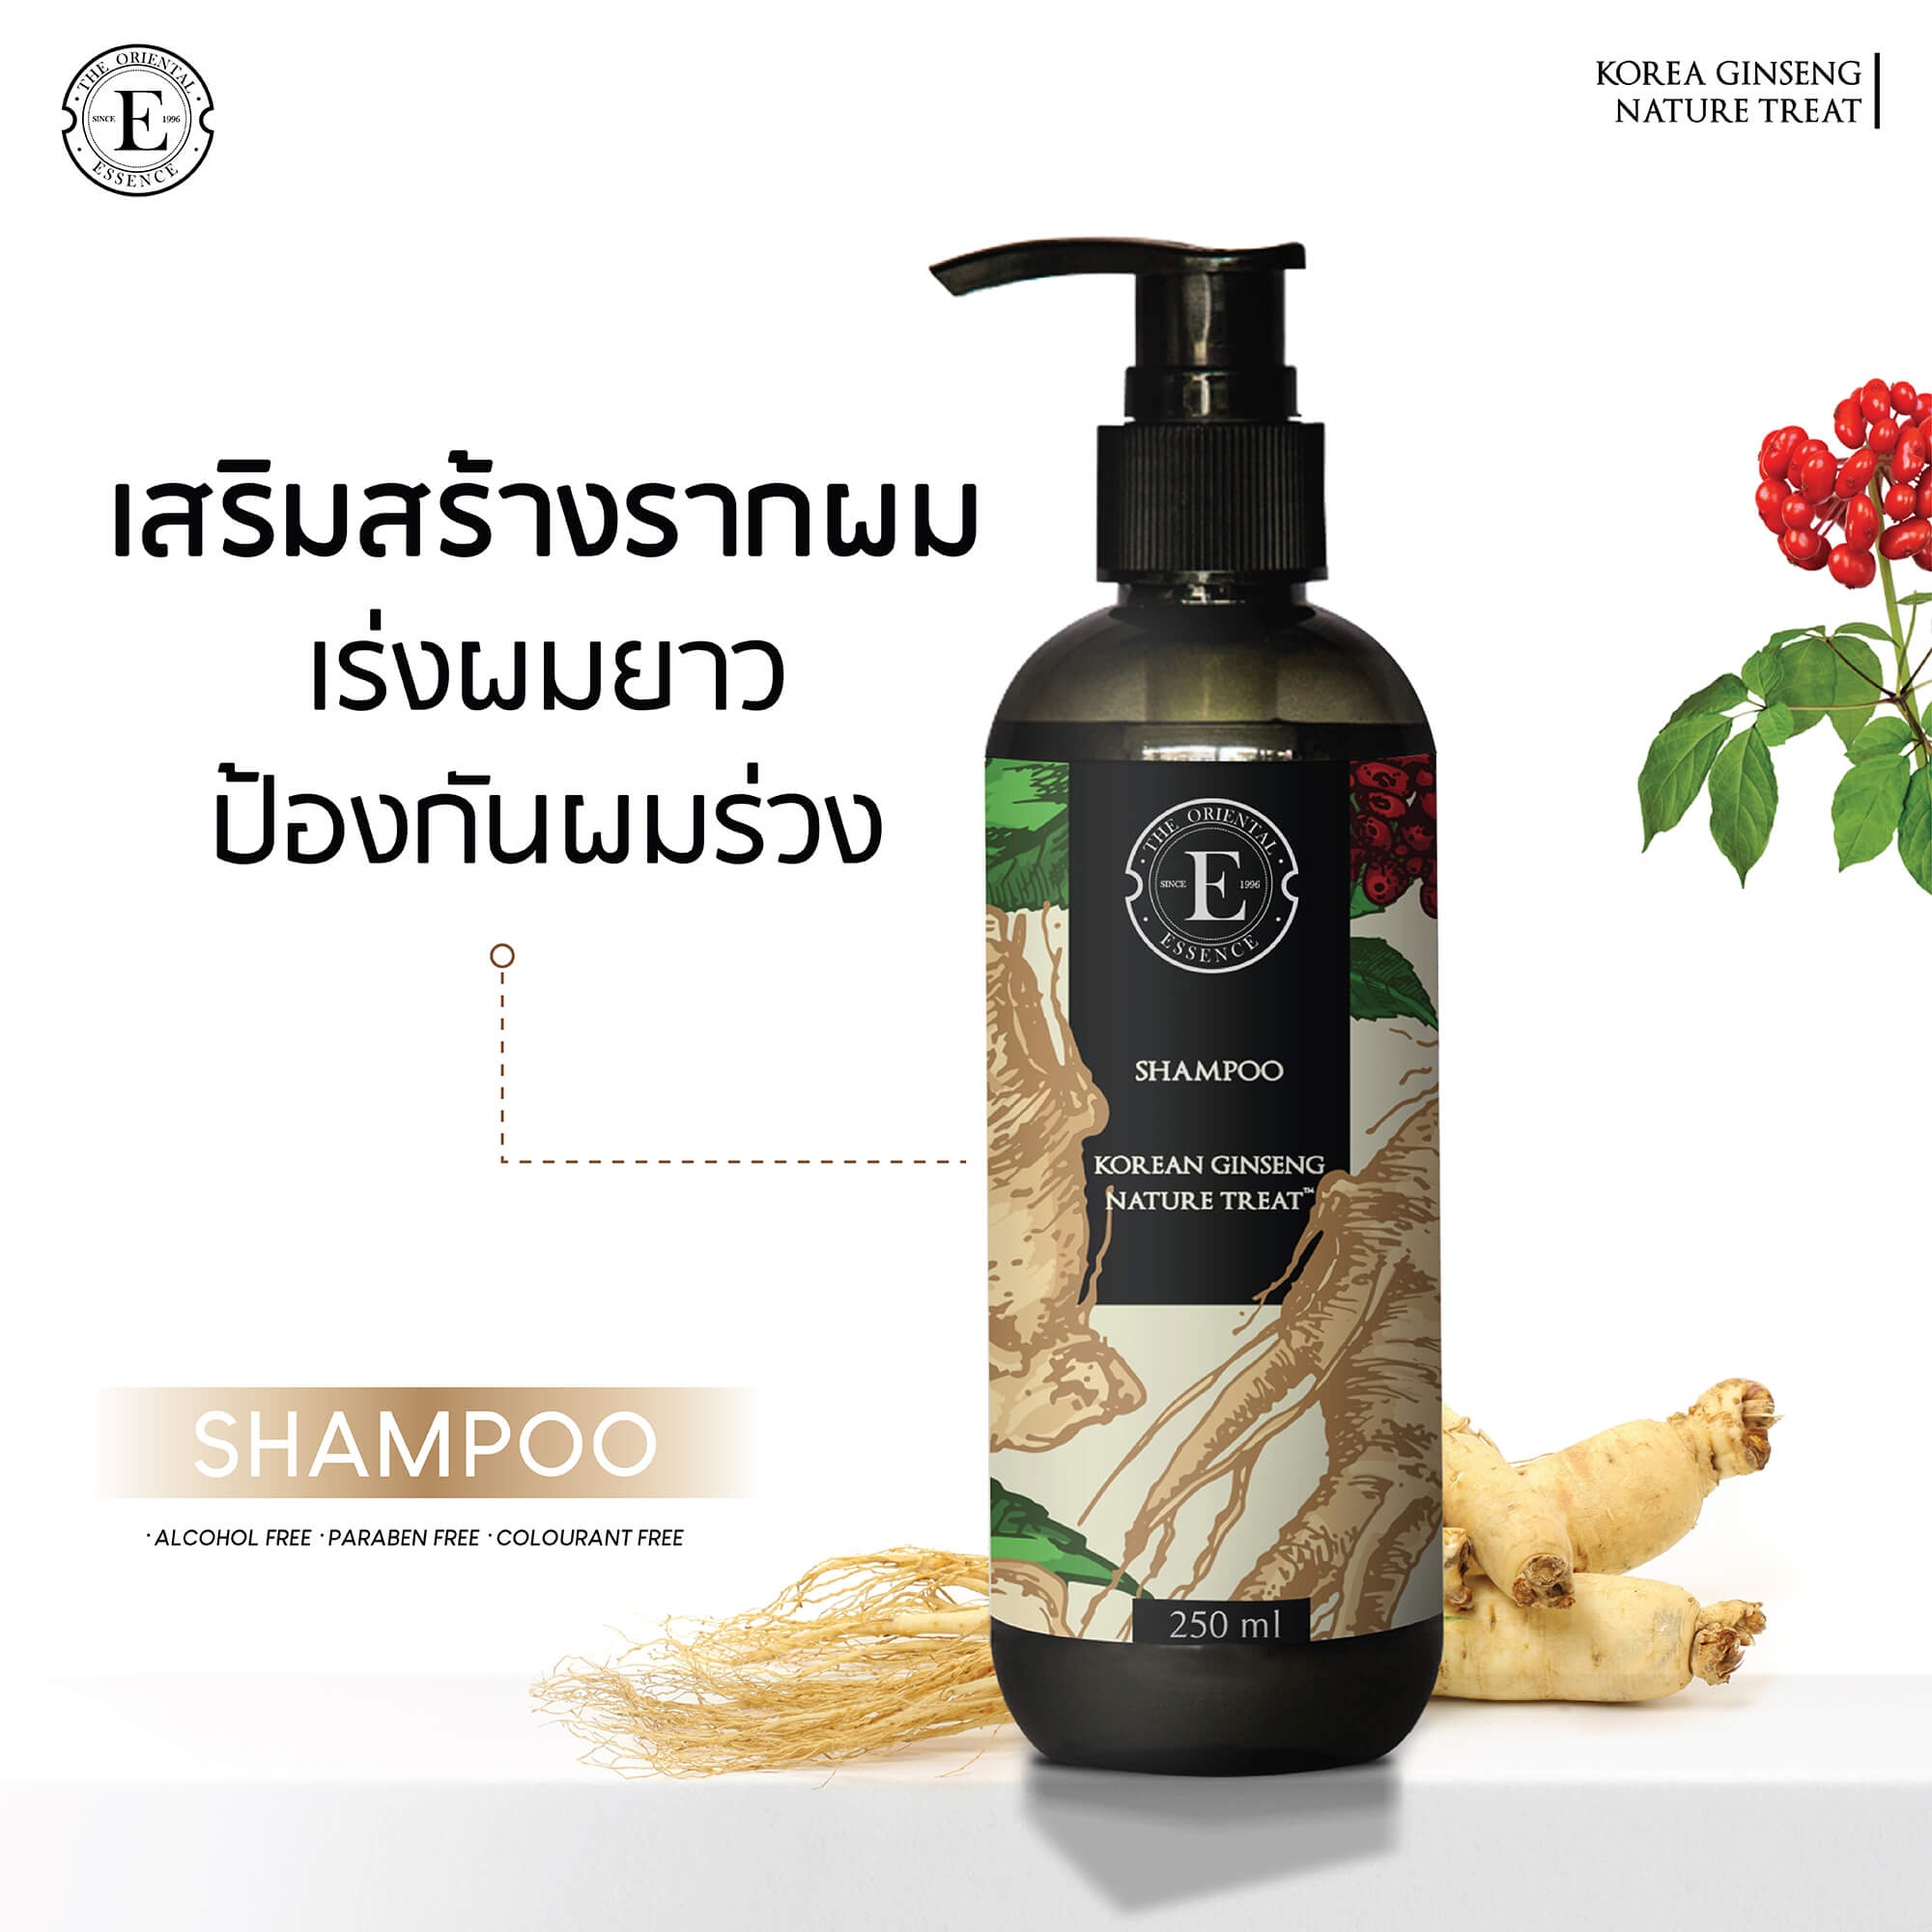 The Oriental Essence Korean Ginseng Shampoo